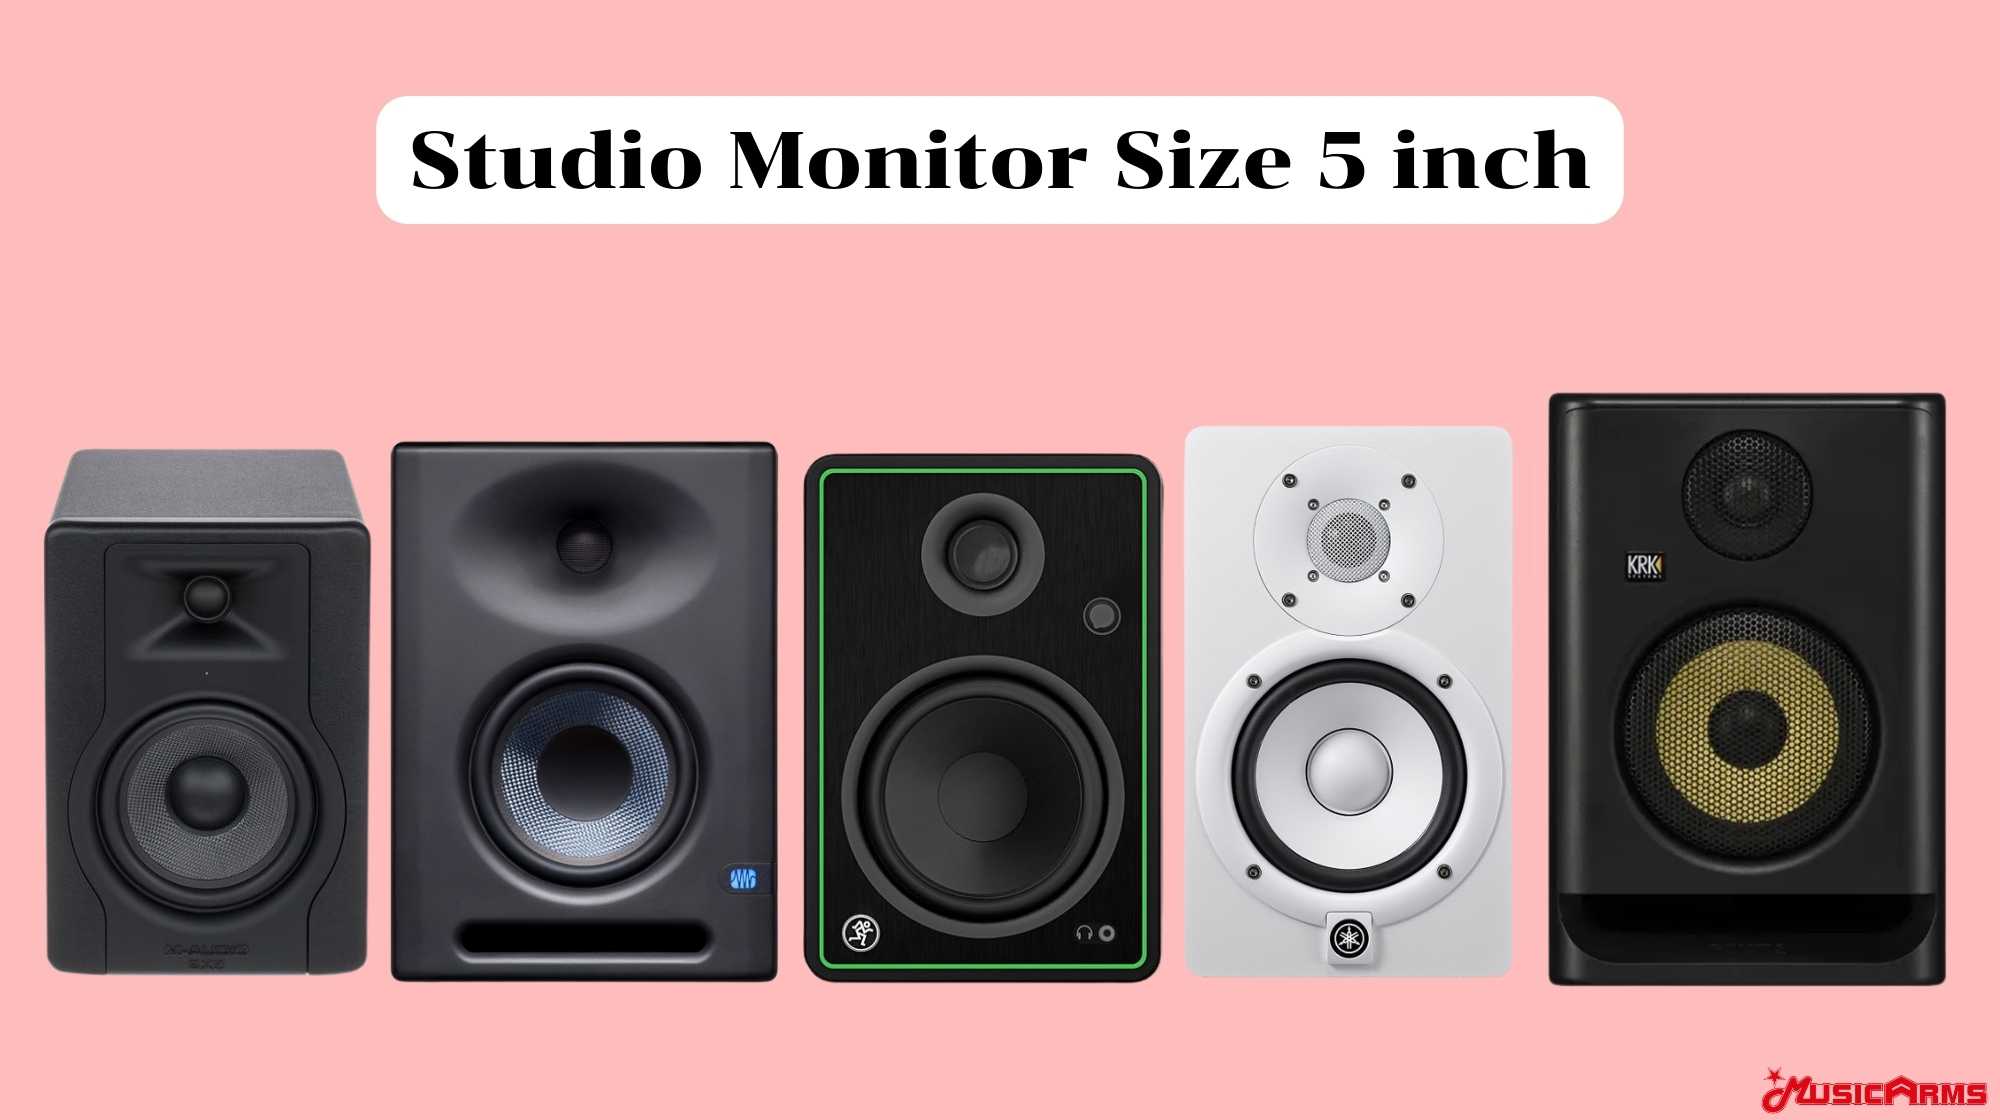 Studio Monitor Size 5 inch